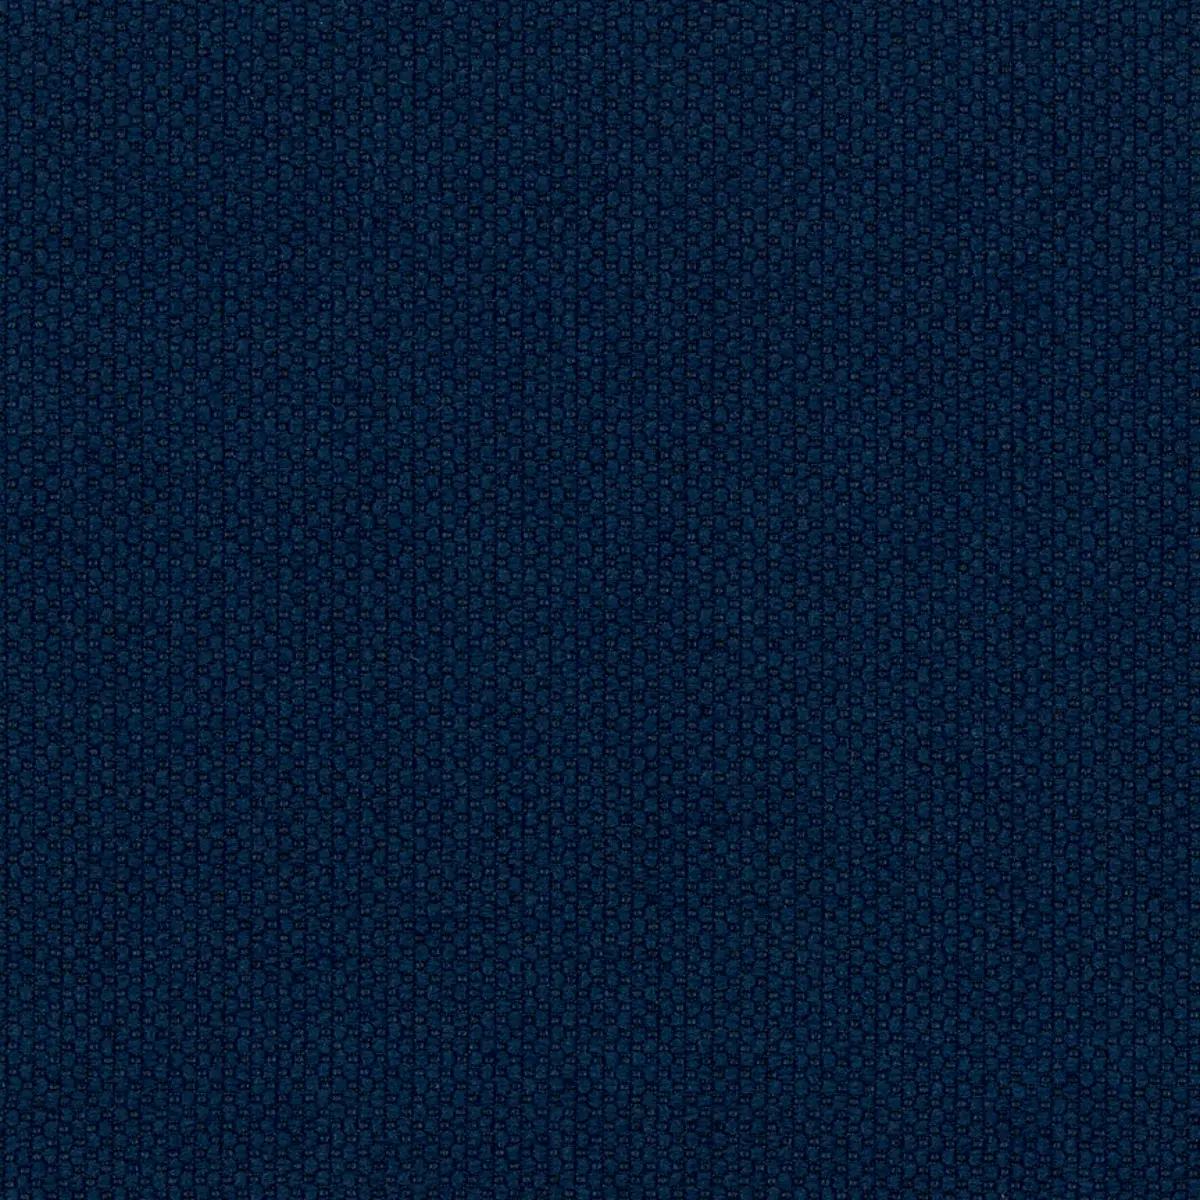 Fabric sample Merit 0006 blue